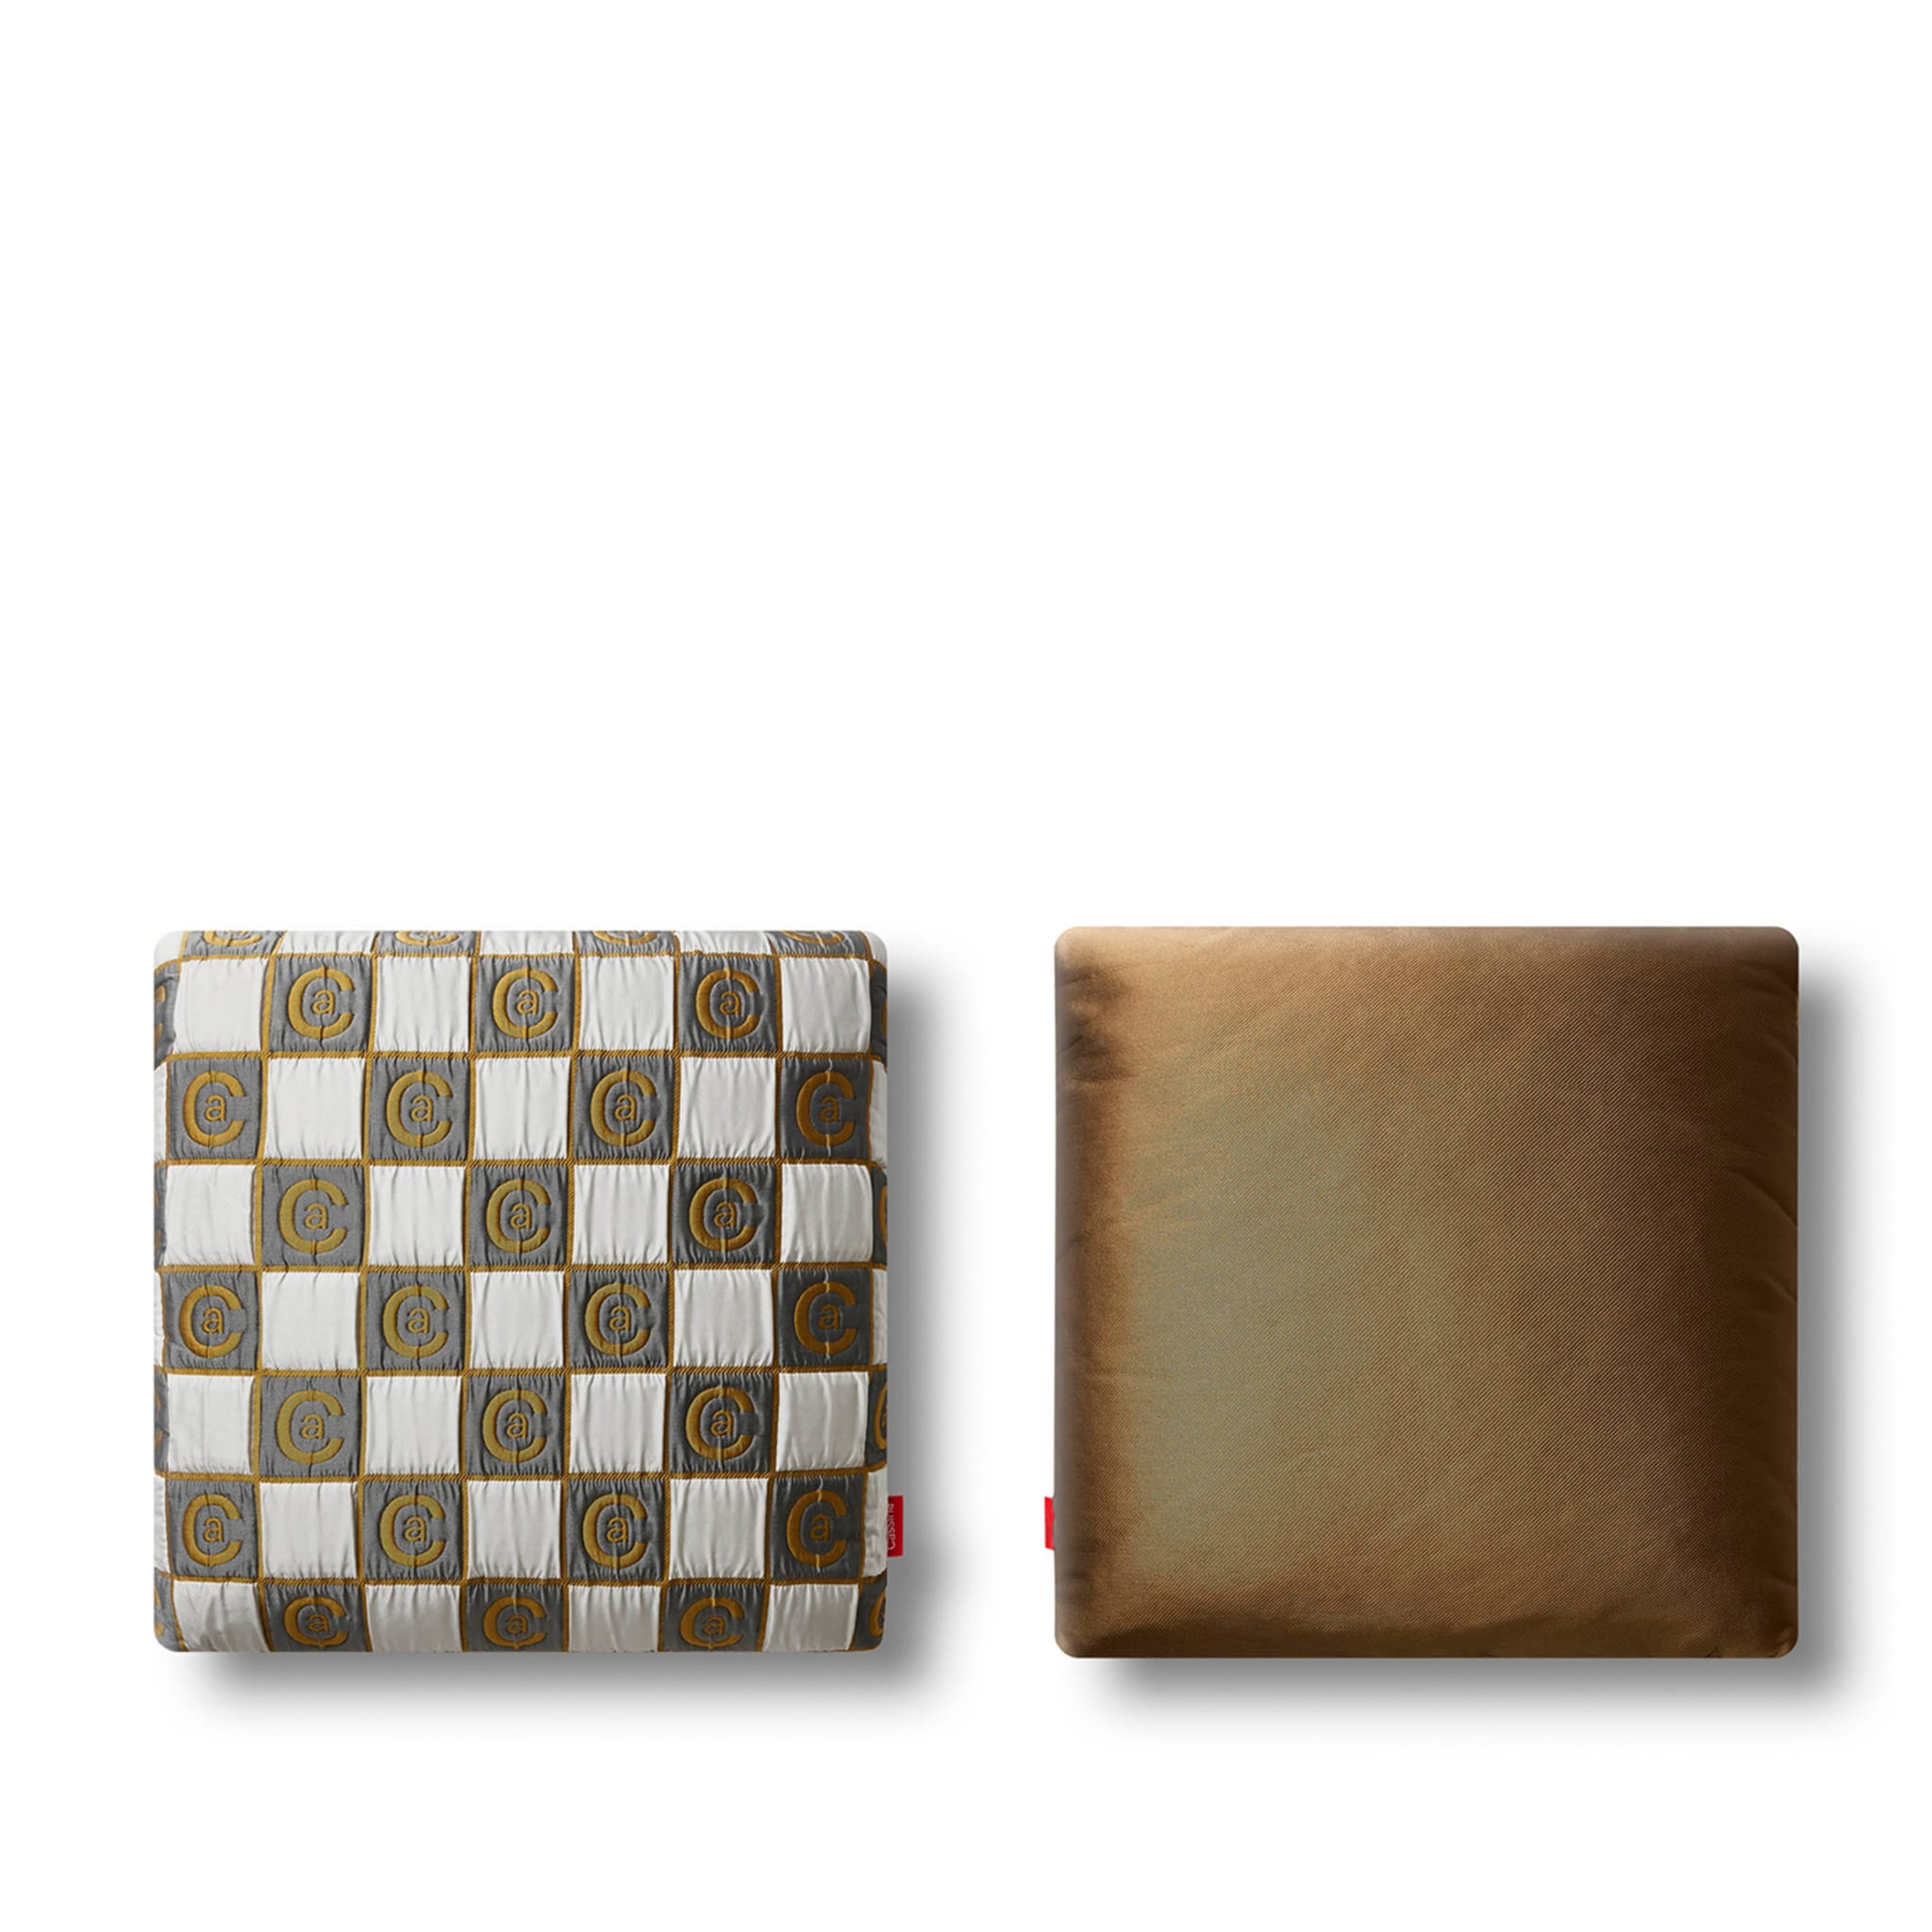 Chess Frame Decorative Cushions #1 - Alternative view 2